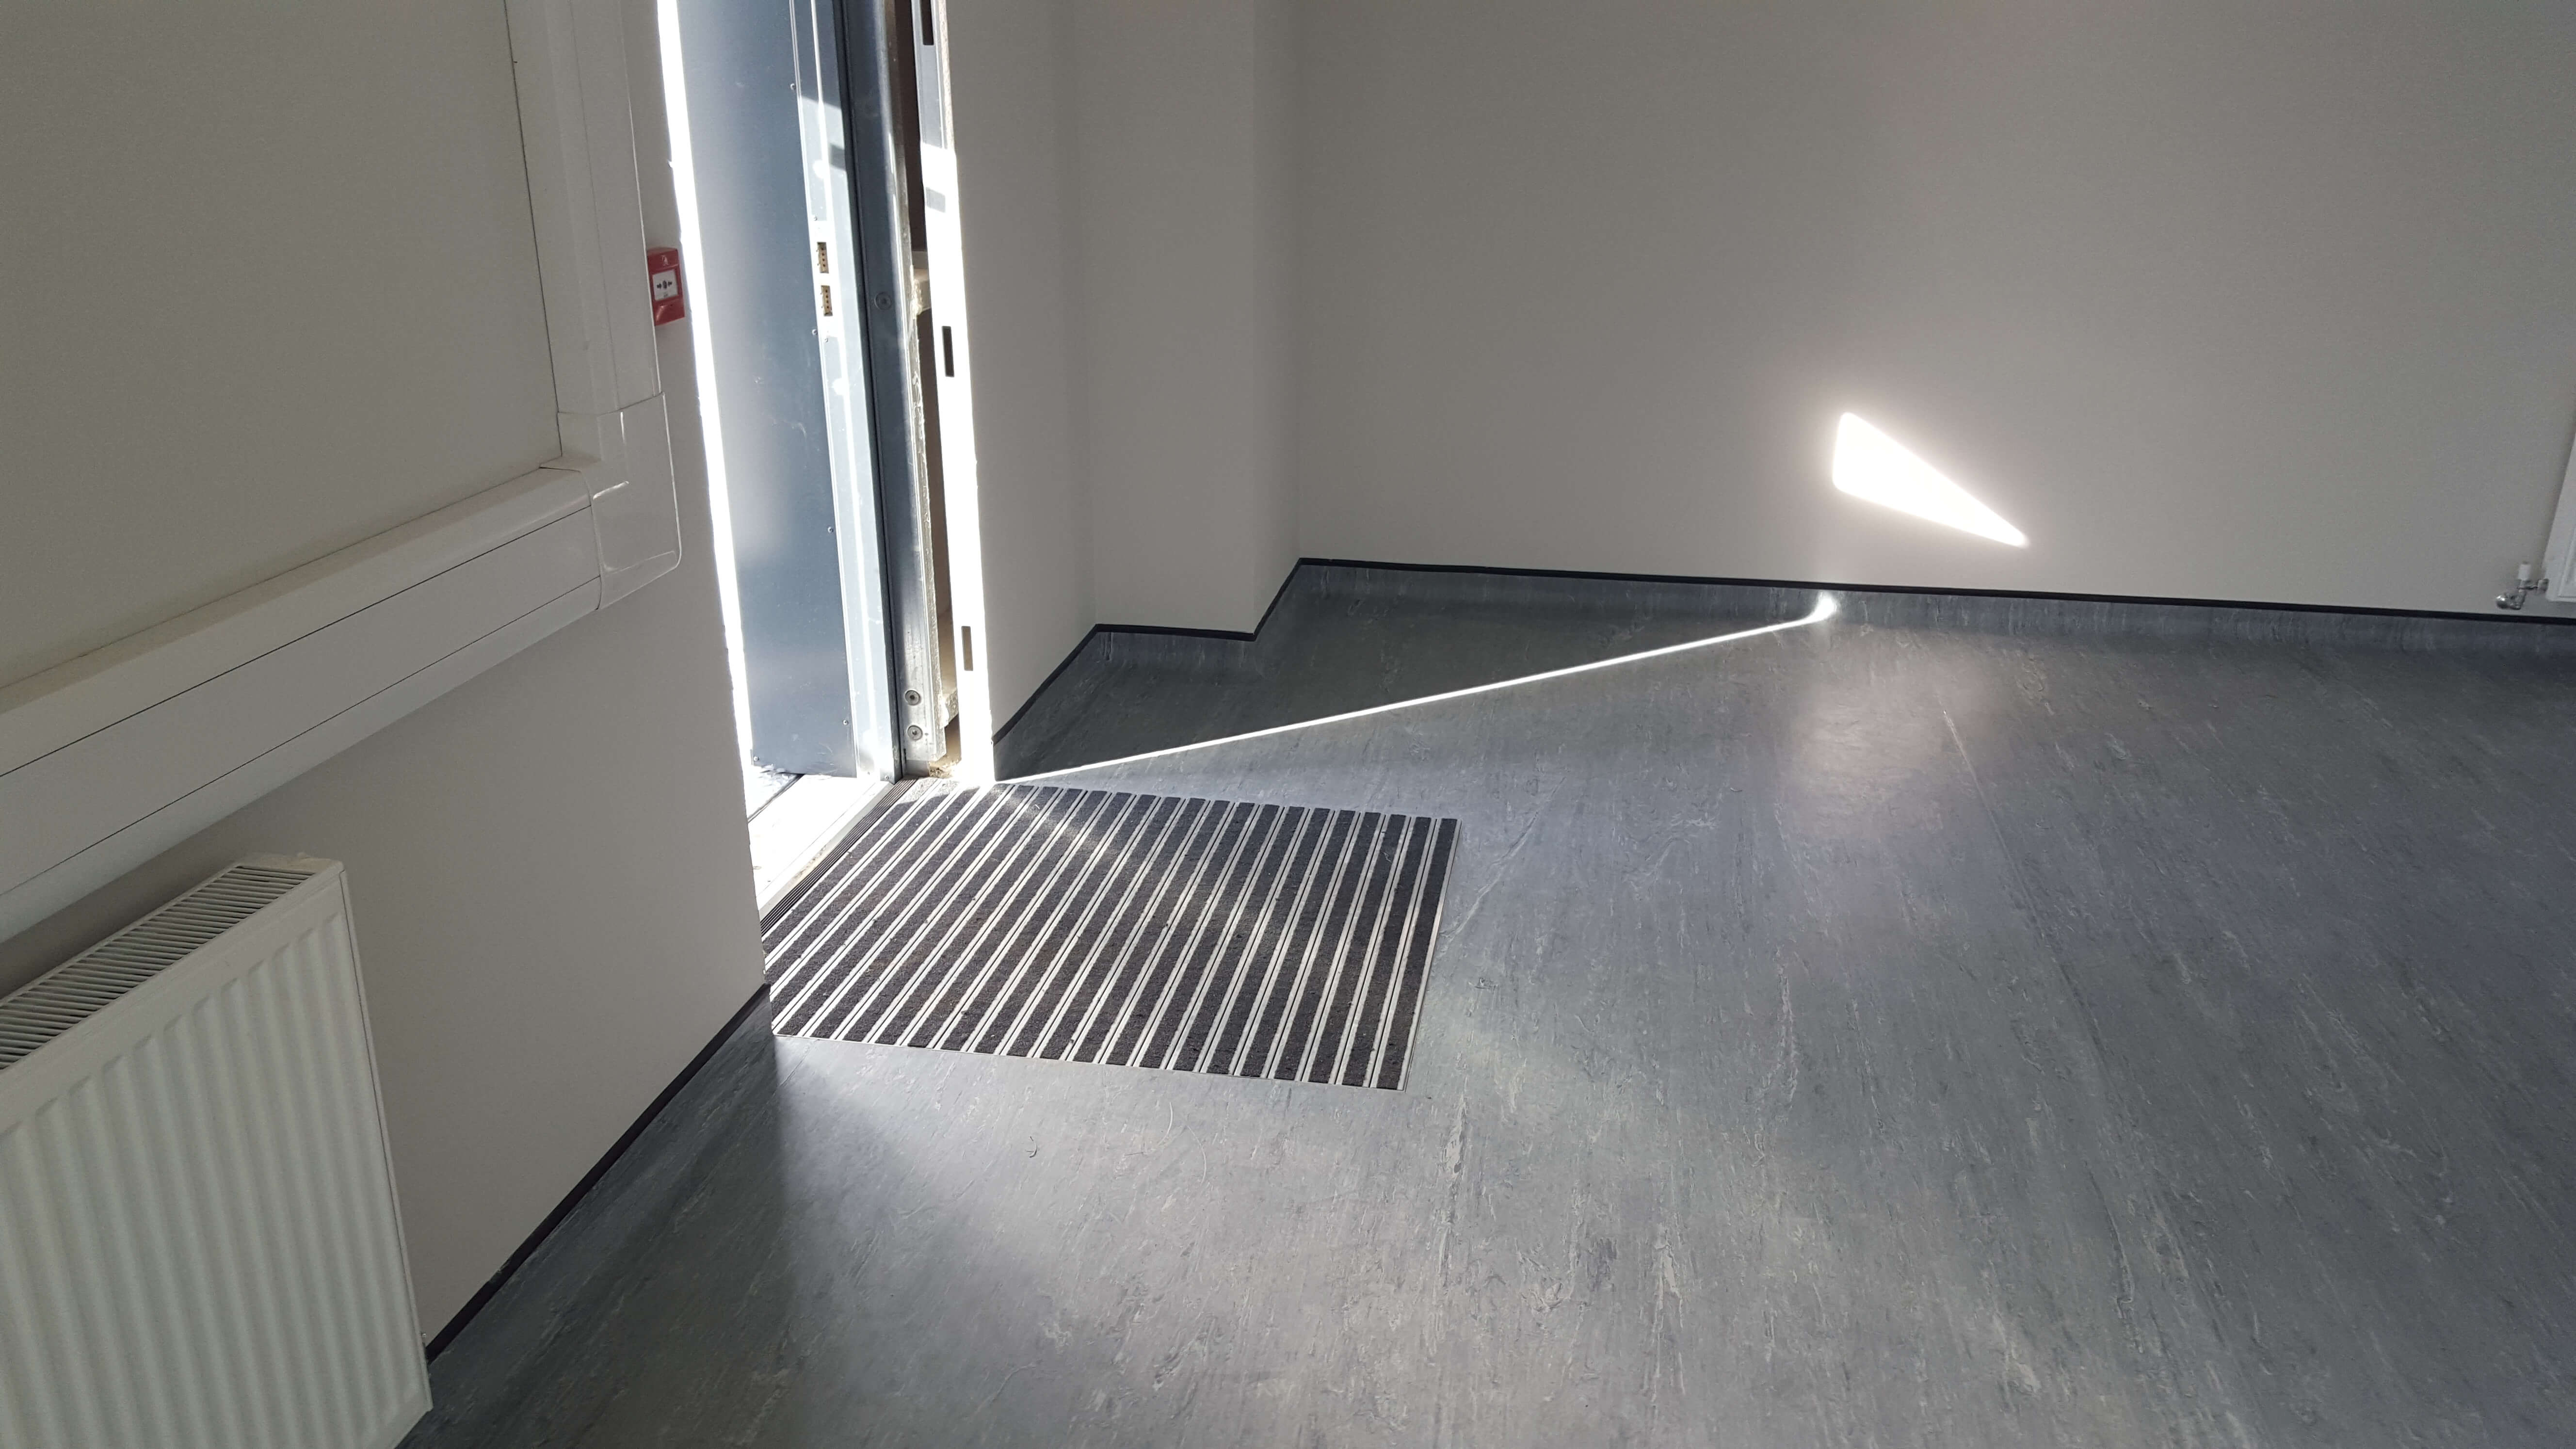 Entrance matting and floors